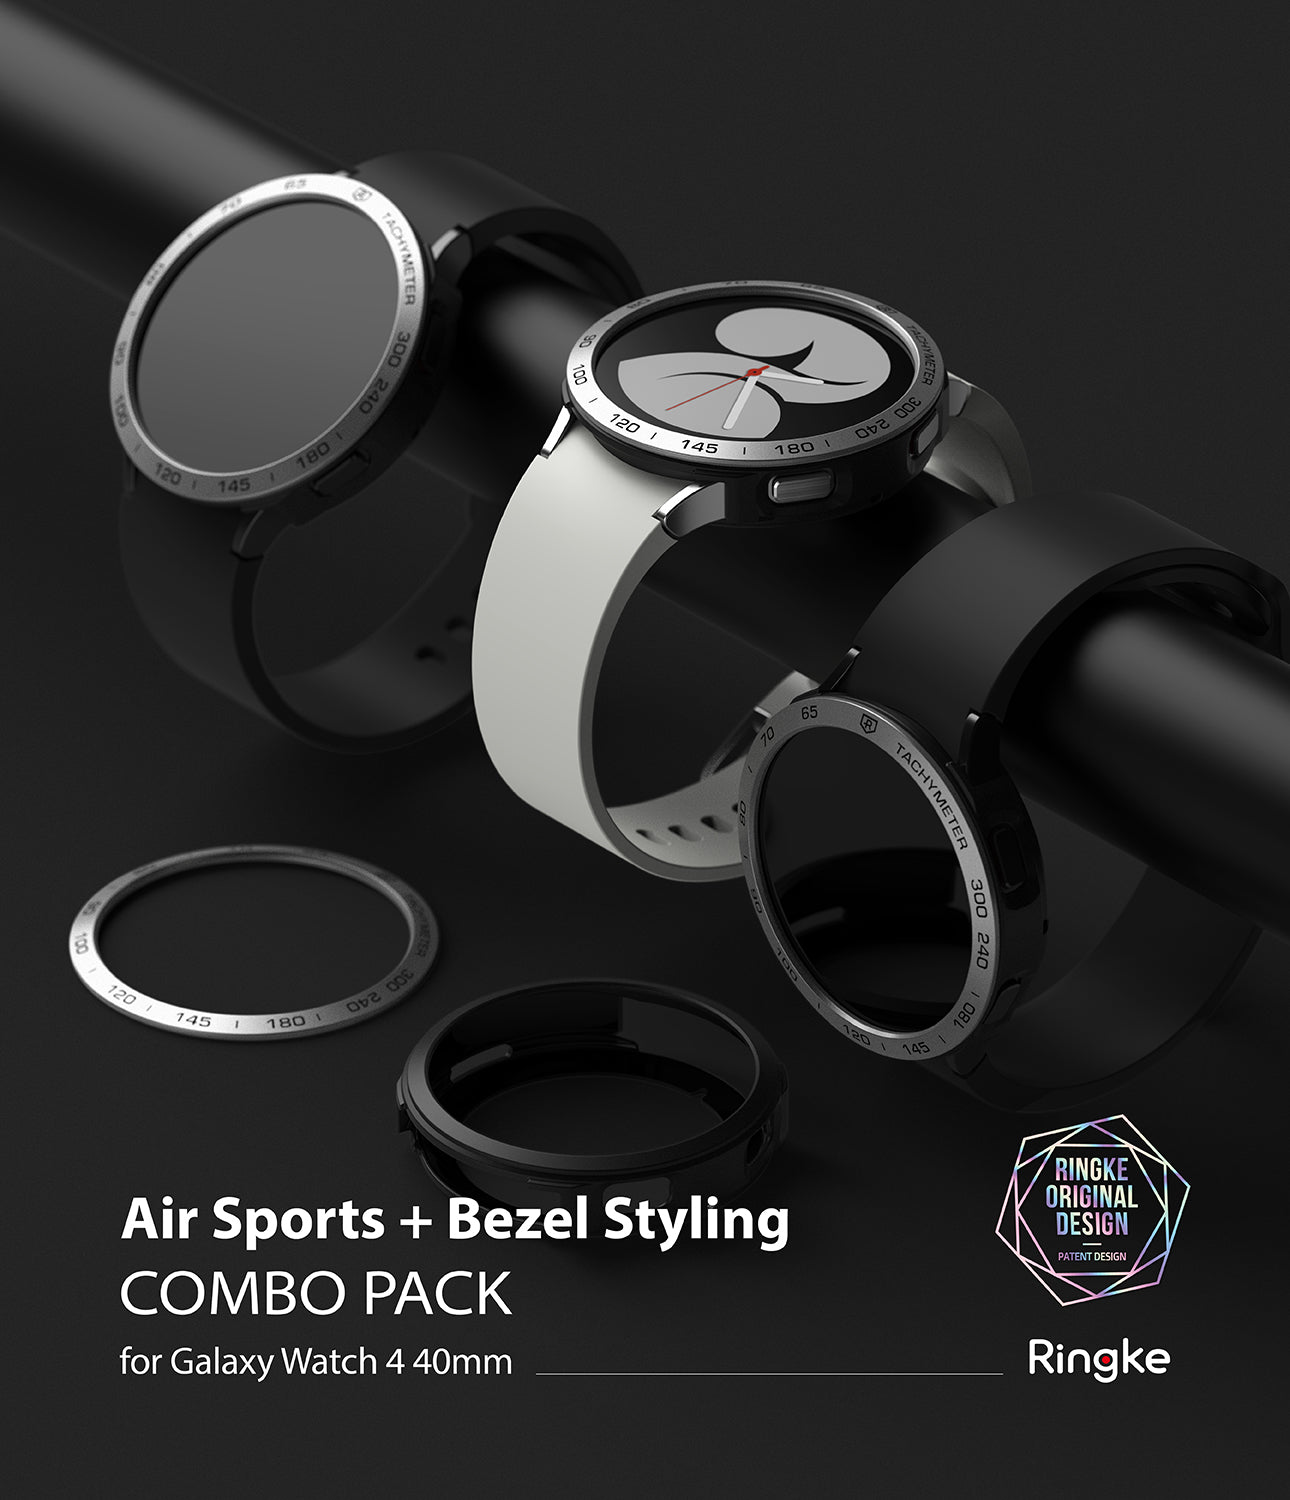 Galaxy Watch 4 40mm | Air Sports Black + Bezel Styling 10 Combo Pack